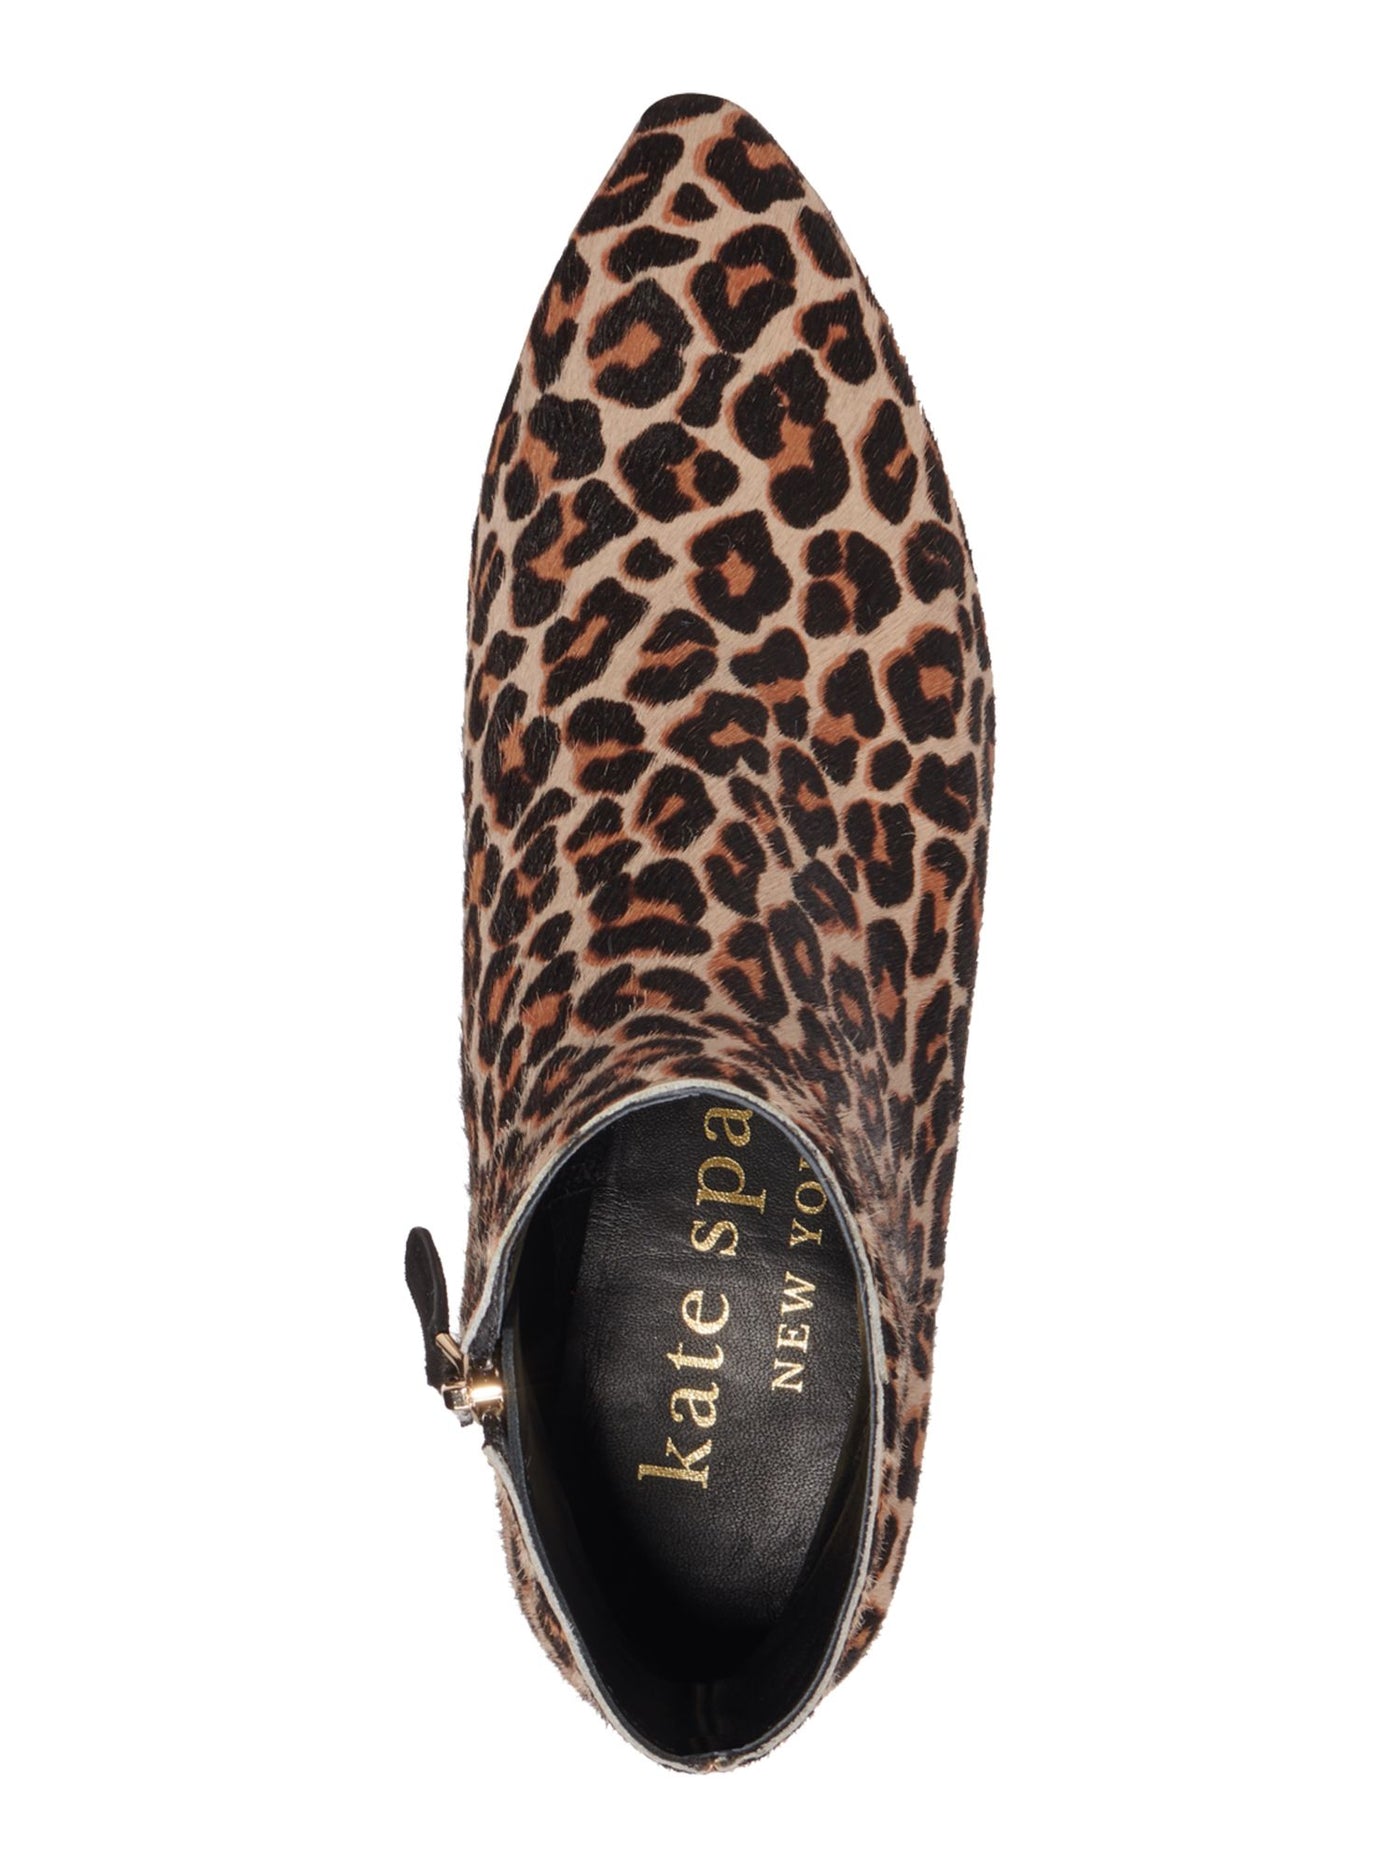 KATE SPADE NEW YORK Womens Beige Animal Print Comfort Sydney Pointed Toe Zip-Up Leather Dress Booties 7.5 B